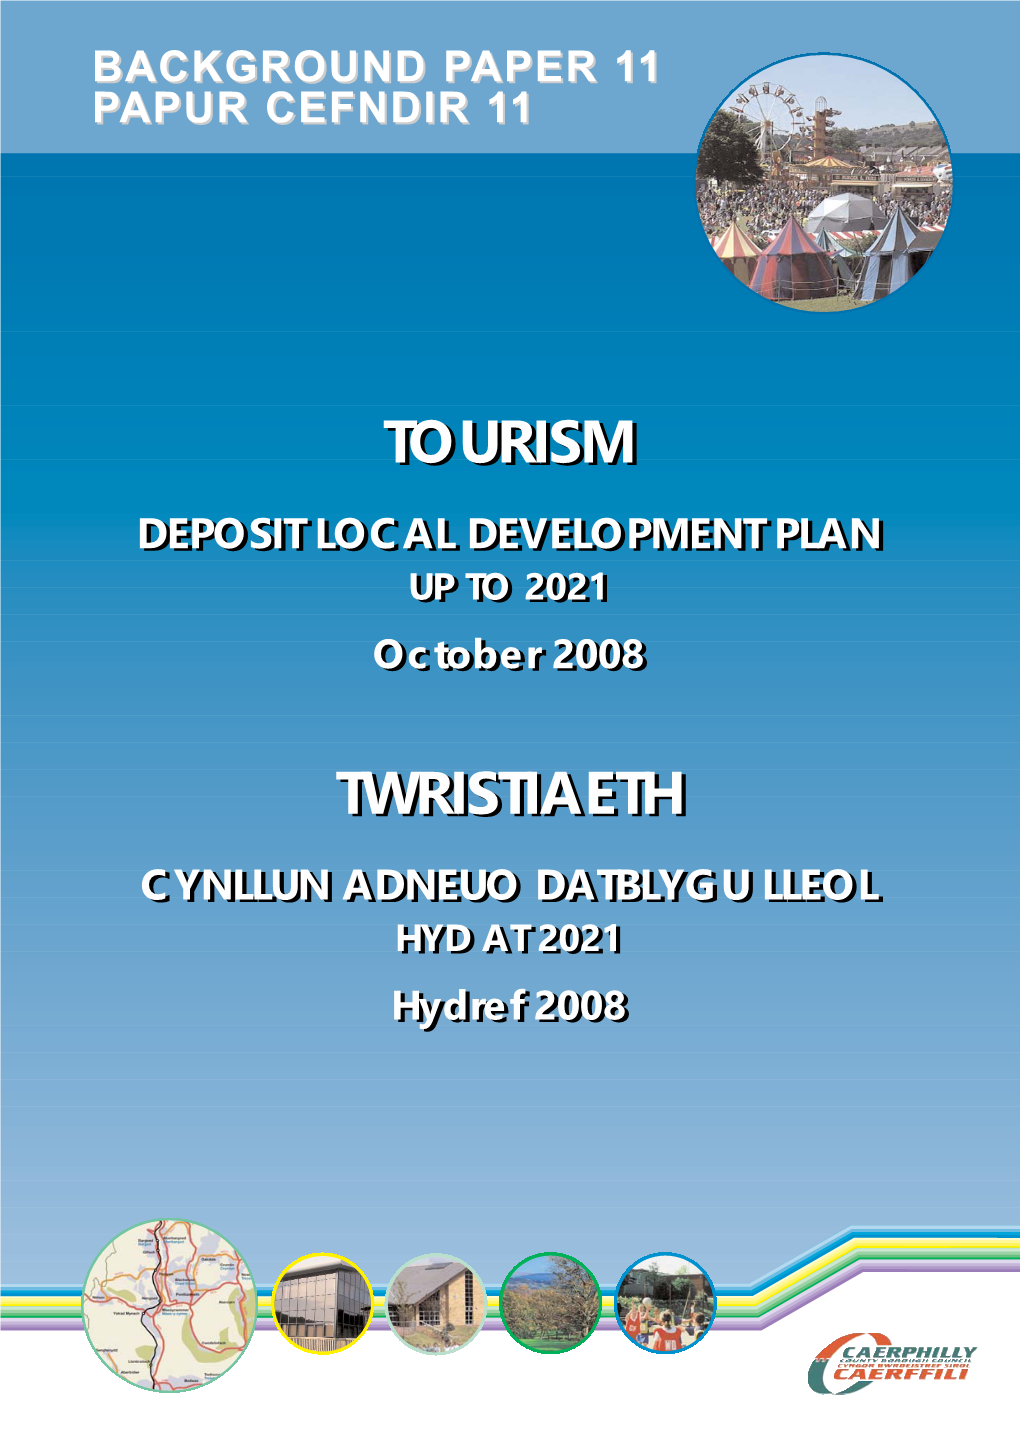 Tourism Background.Qxp 03/10/2008 12:36 Page 1